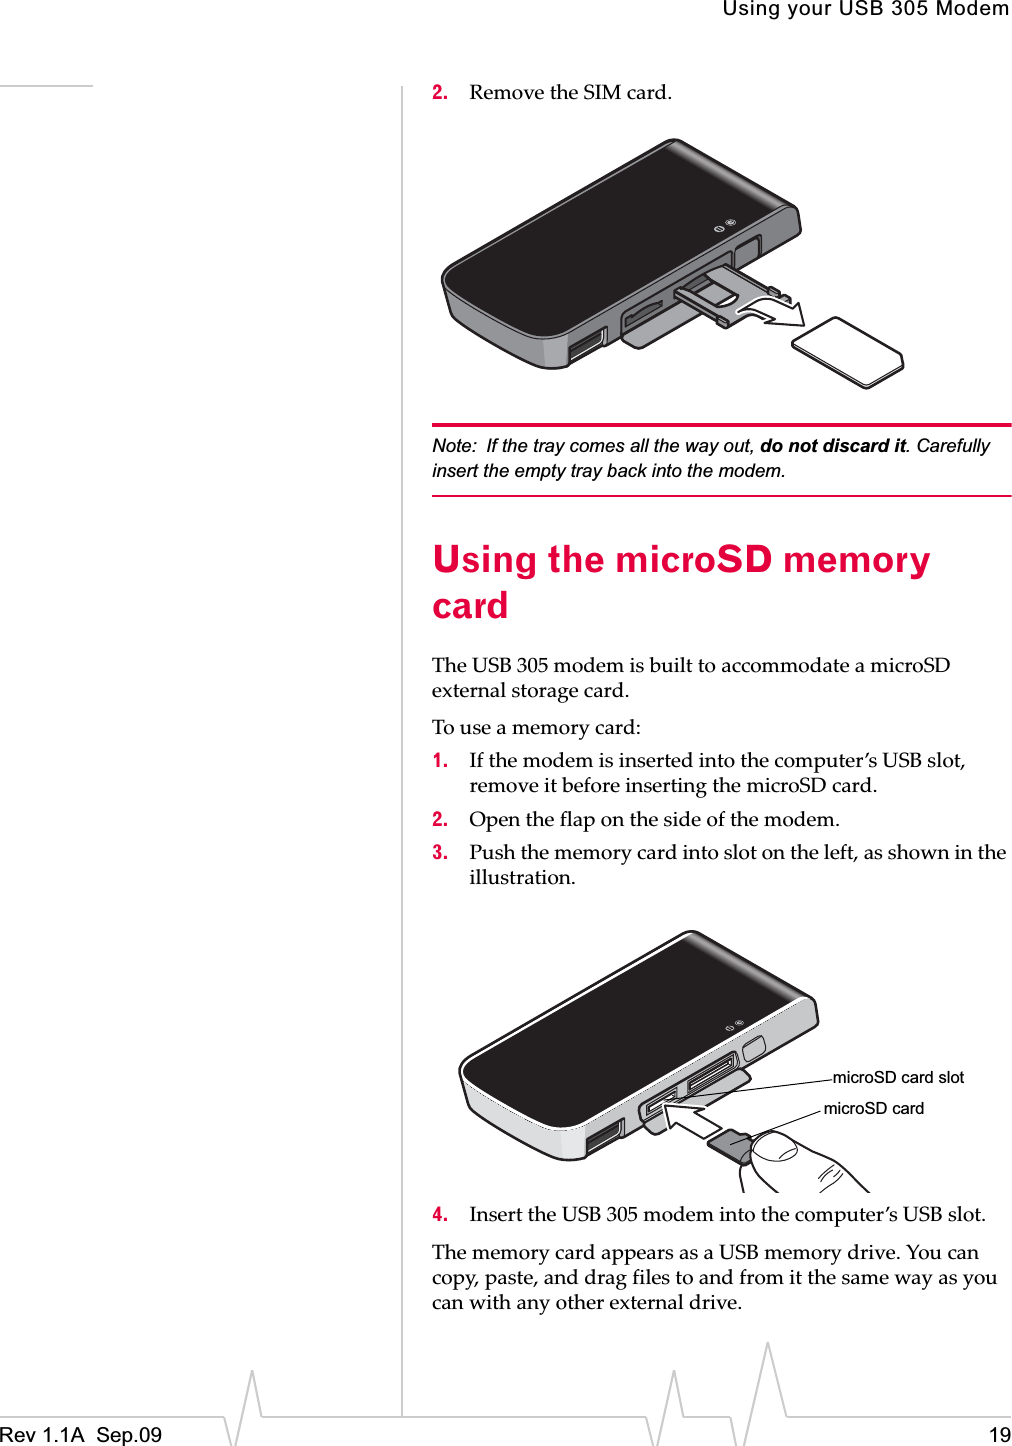 Using your USB 305 ModemRev 1.1A  Sep.09 192. RemoveȱtheȱSIMȱcard.Note: If the tray comes all the way out, do not discard it. Carefully insert the empty tray back into the modem.Using the microSD memory cardTheȱUSBȱ305ȱmodemȱisȱbuiltȱtoȱaccommodateȱaȱmicroSDȱexternalȱstorageȱcard.ȱToȱuseȱaȱmemoryȱcard:1. Ifȱtheȱmodemȱisȱinsertedȱintoȱtheȱcomputer’sȱUSBȱslot,ȱremoveȱitȱbeforeȱinsertingȱtheȱmicroSDȱcard.2. Openȱtheȱflapȱonȱtheȱsideȱofȱtheȱmodem.3. Pushȱtheȱmemoryȱcardȱintoȱslotȱonȱtheȱleft,ȱasȱshownȱinȱtheȱillustration.ȱ4. InsertȱtheȱUSBȱ305ȱmodemȱintoȱtheȱcomputer’sȱUSBȱslot.TheȱmemoryȱcardȱappearsȱasȱaȱUSBȱmemoryȱdrive.ȱYouȱcanȱcopy,ȱpaste,ȱandȱdragȱfilesȱtoȱandȱfromȱitȱtheȱsameȱwayȱasȱyouȱcanȱwithȱanyȱotherȱexternalȱdrive.microSD cardmicroSD card slot